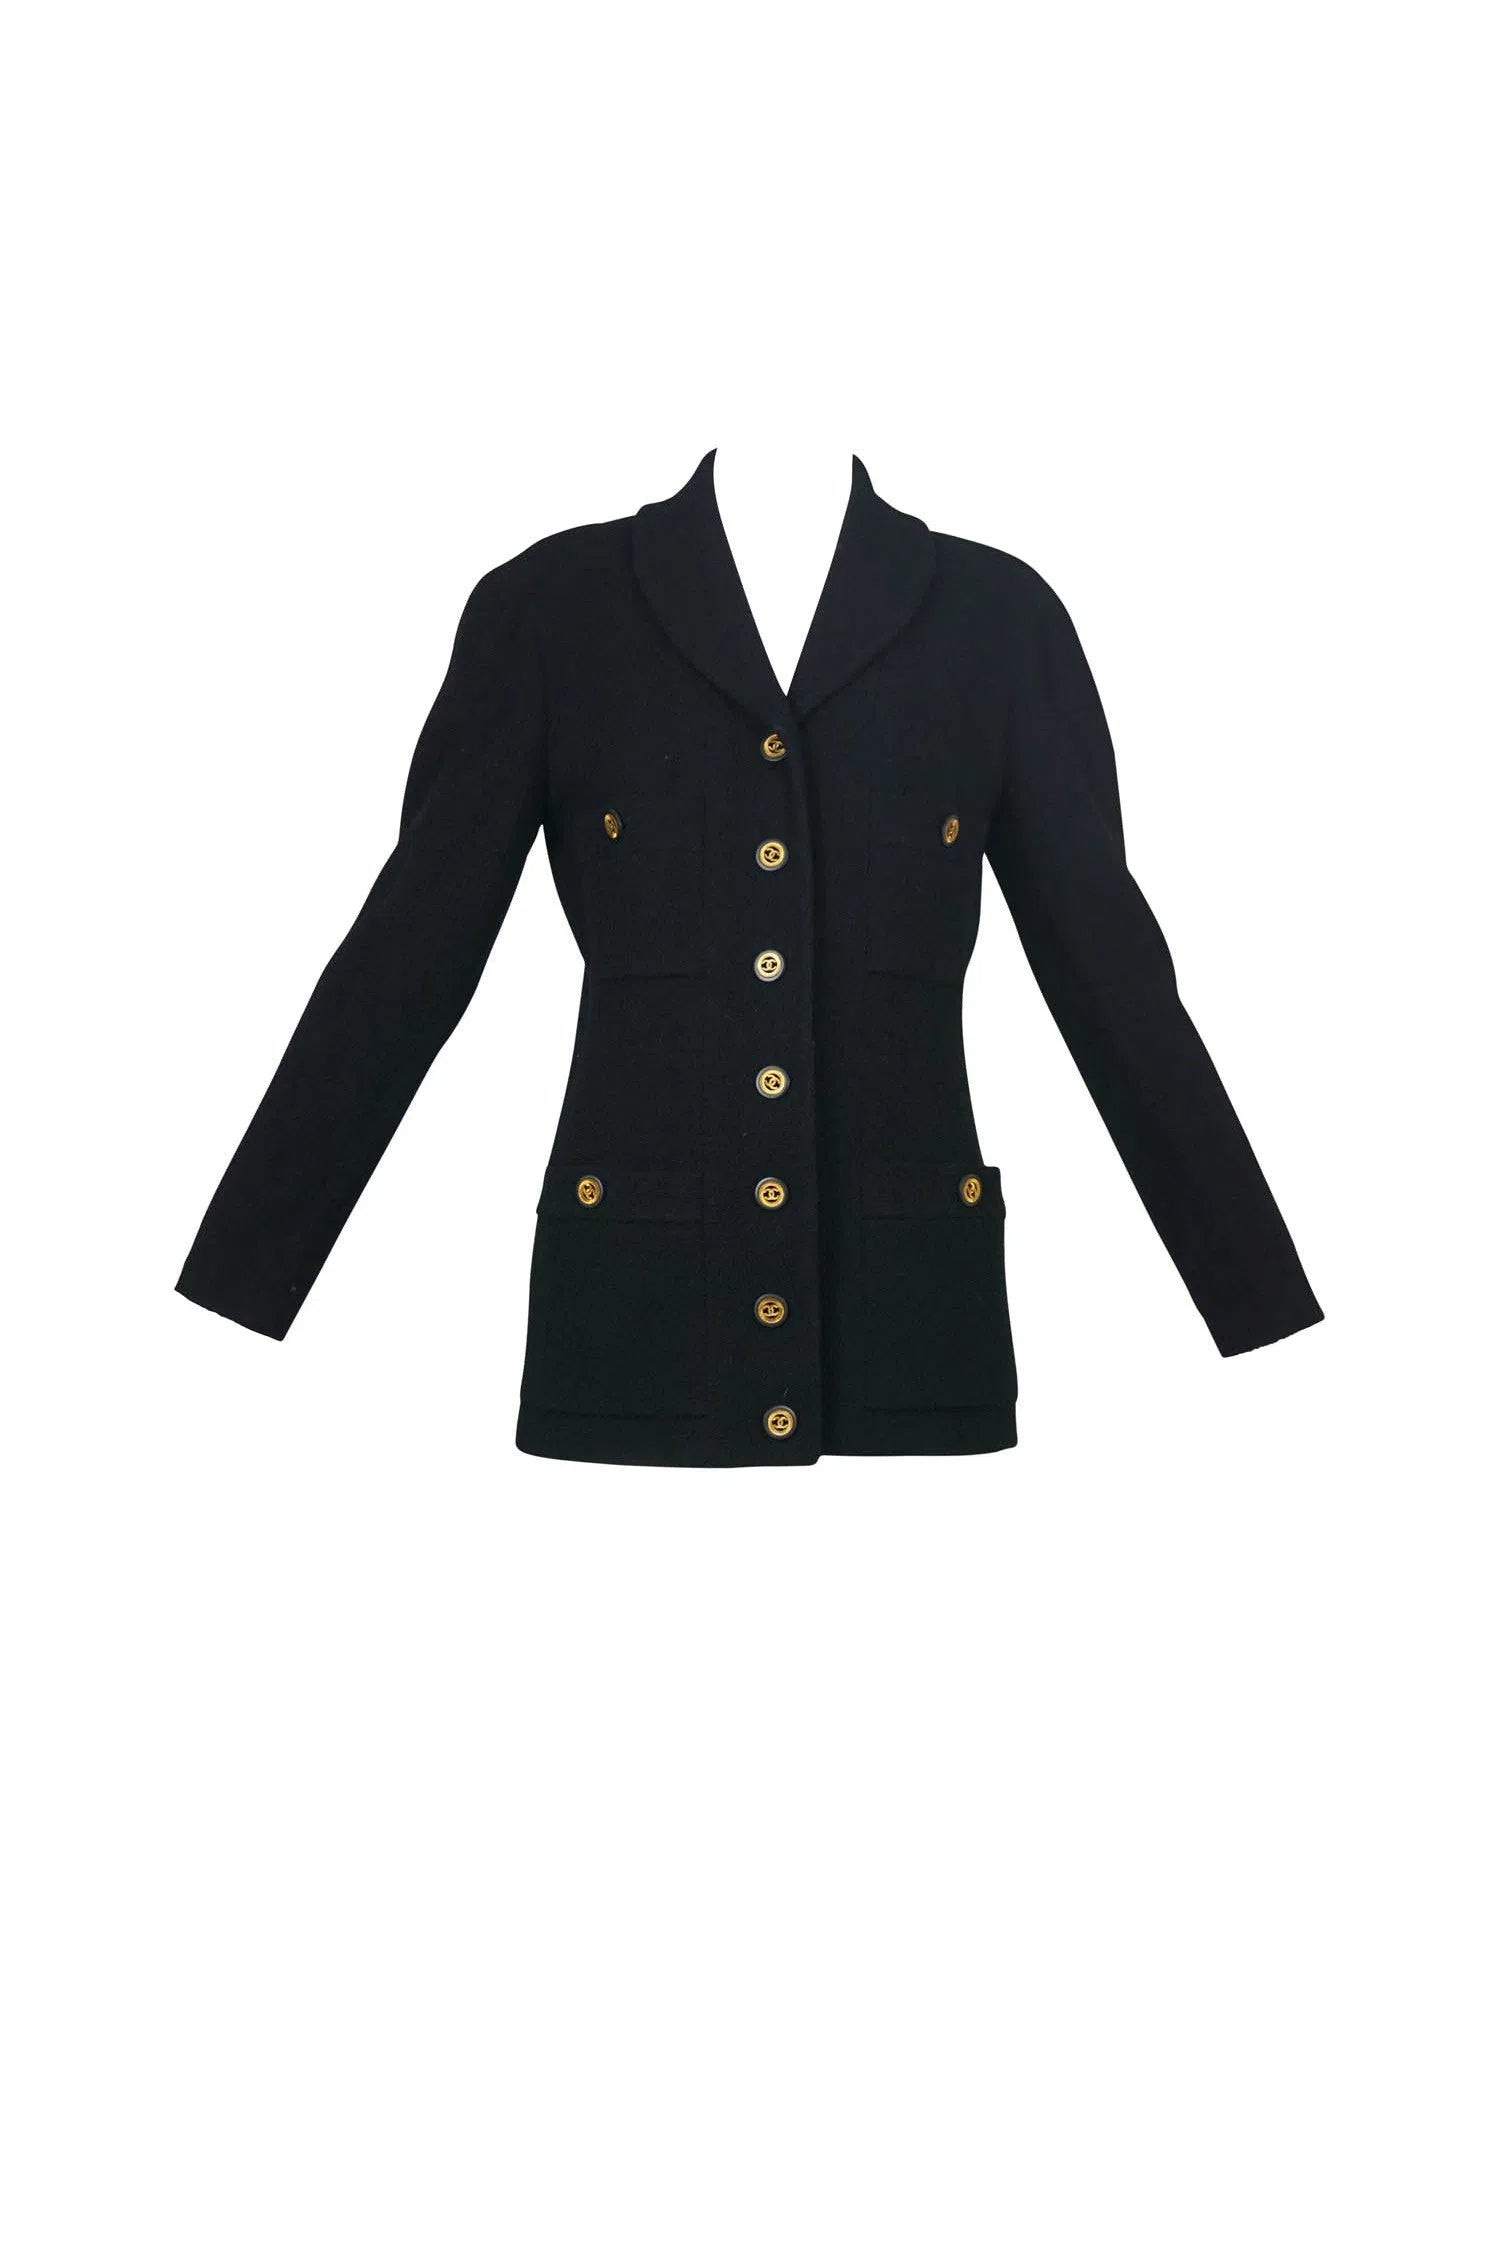 Chanel Black Jacket CC Buttons Vintage 1990s Size 40 - Foxy Couture Carmel